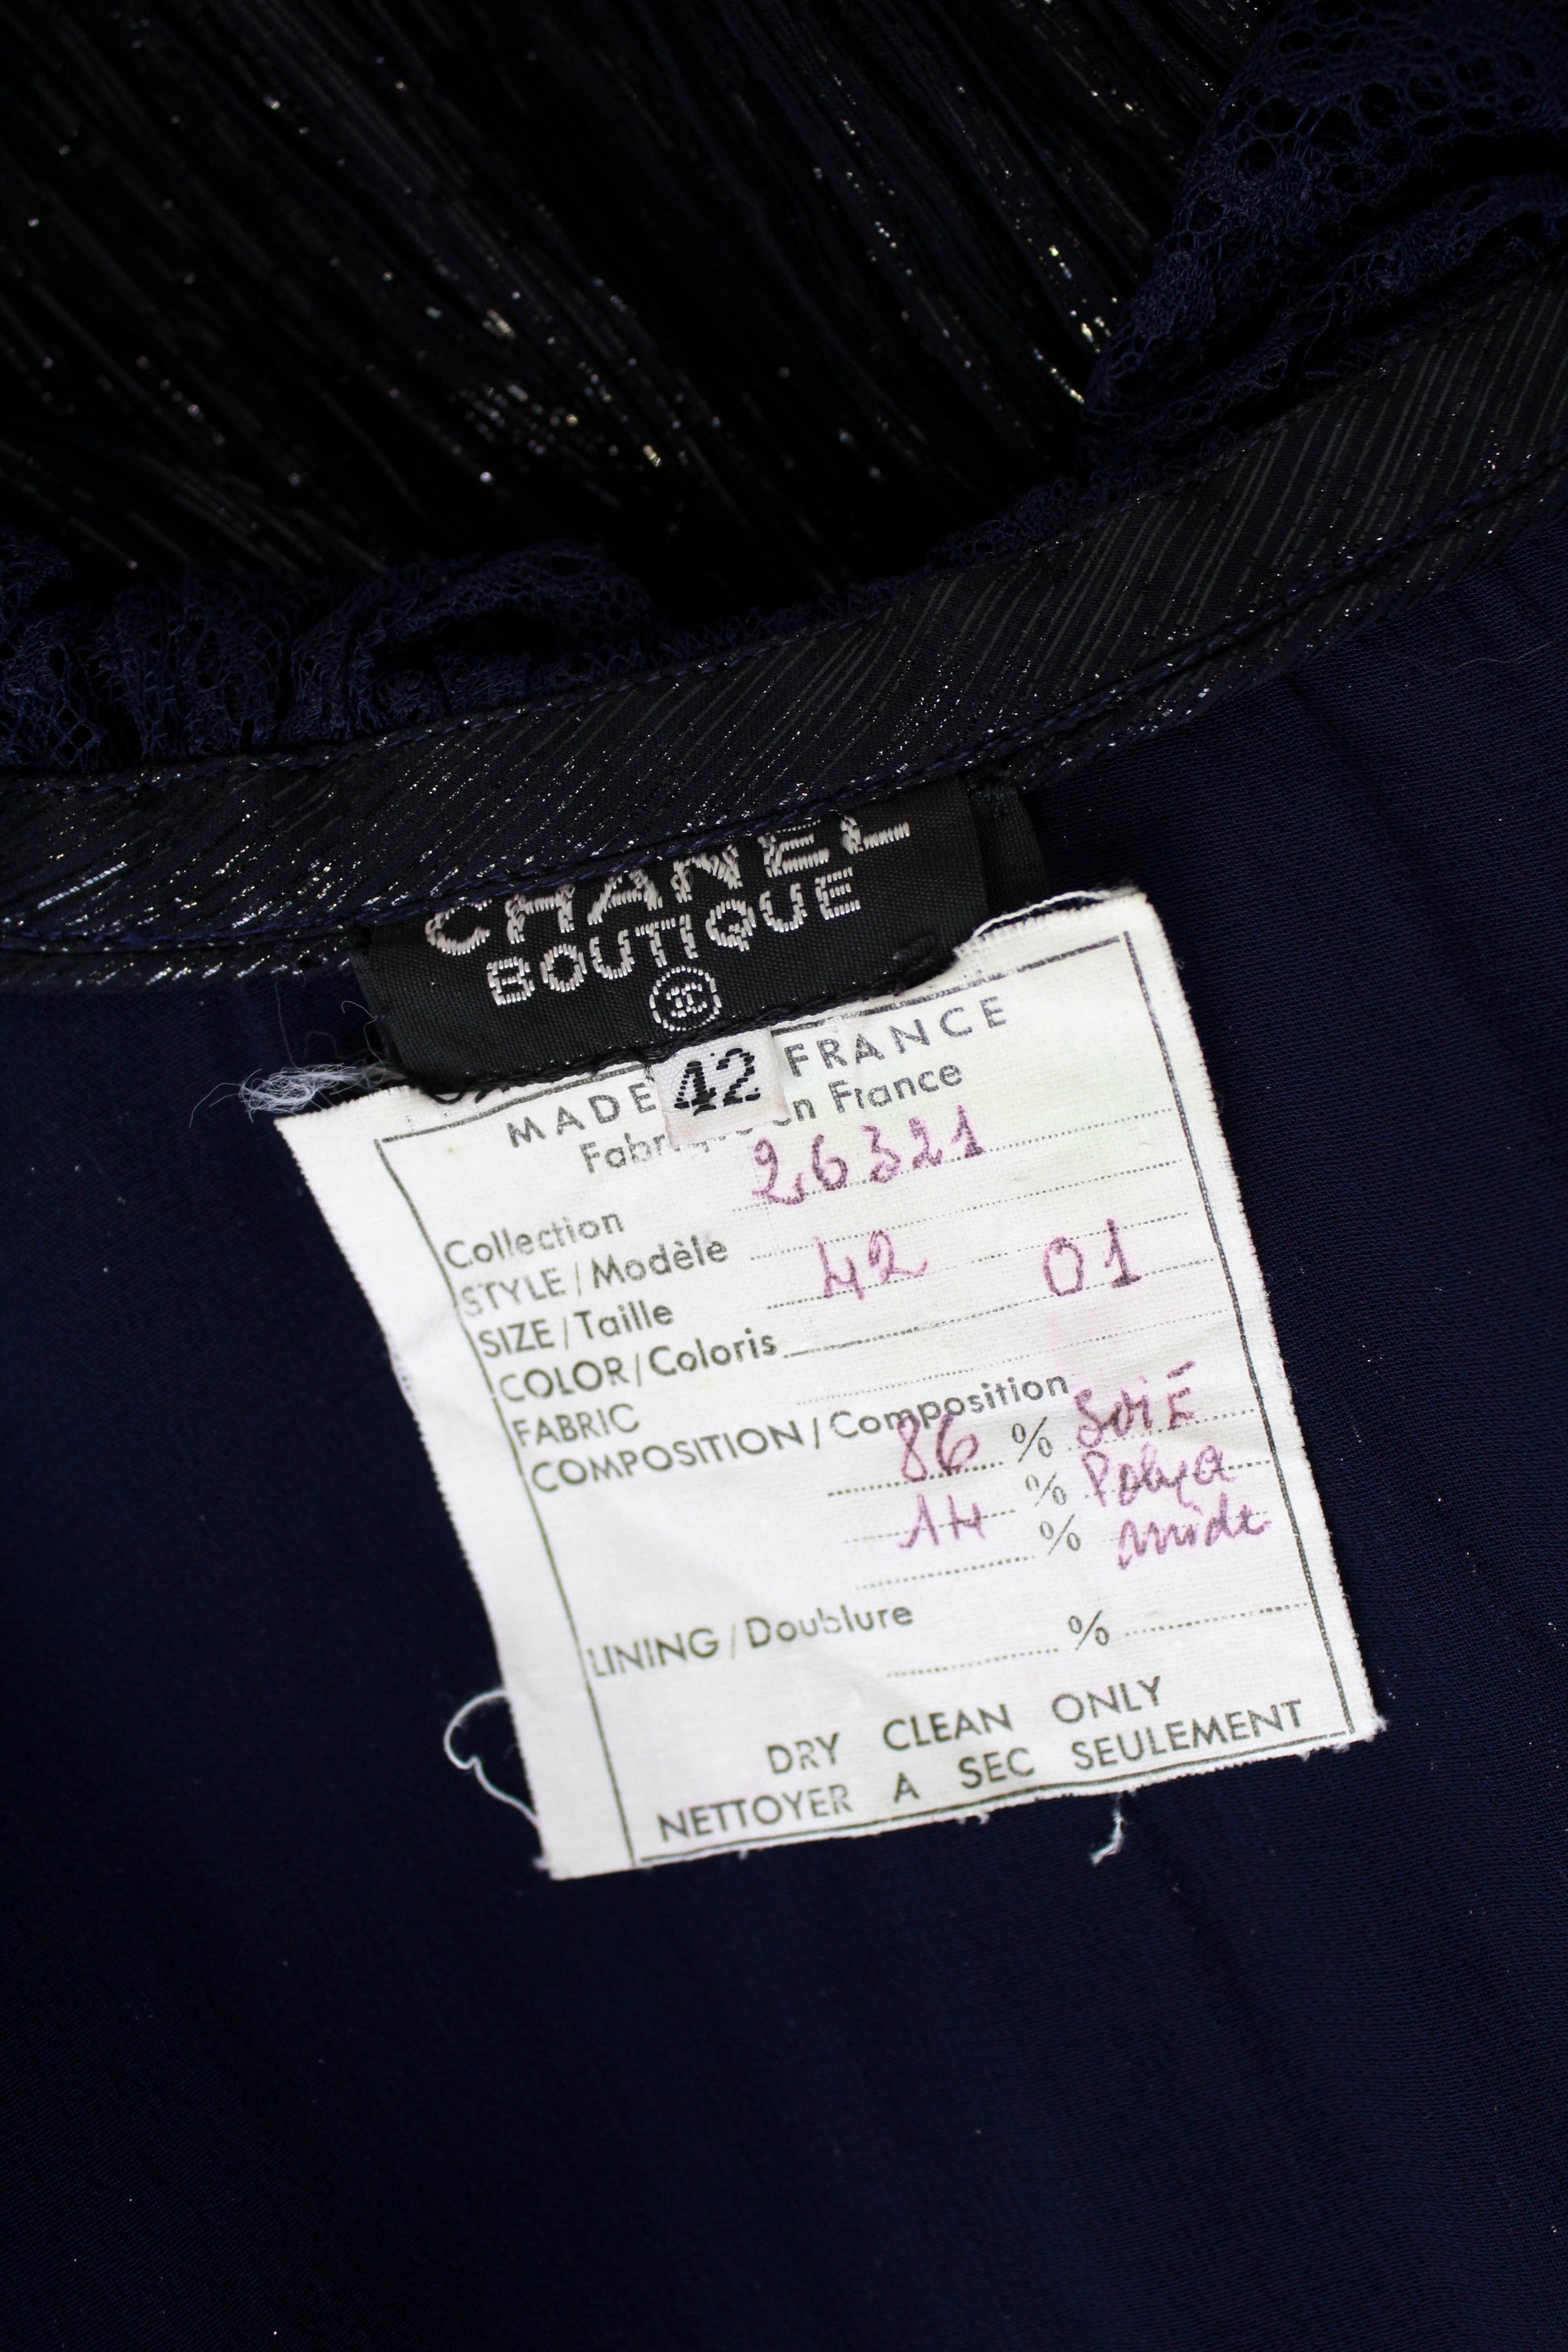 Chanel T Shirt, Chanel Logo Tee Shirts, Chanel Algeria